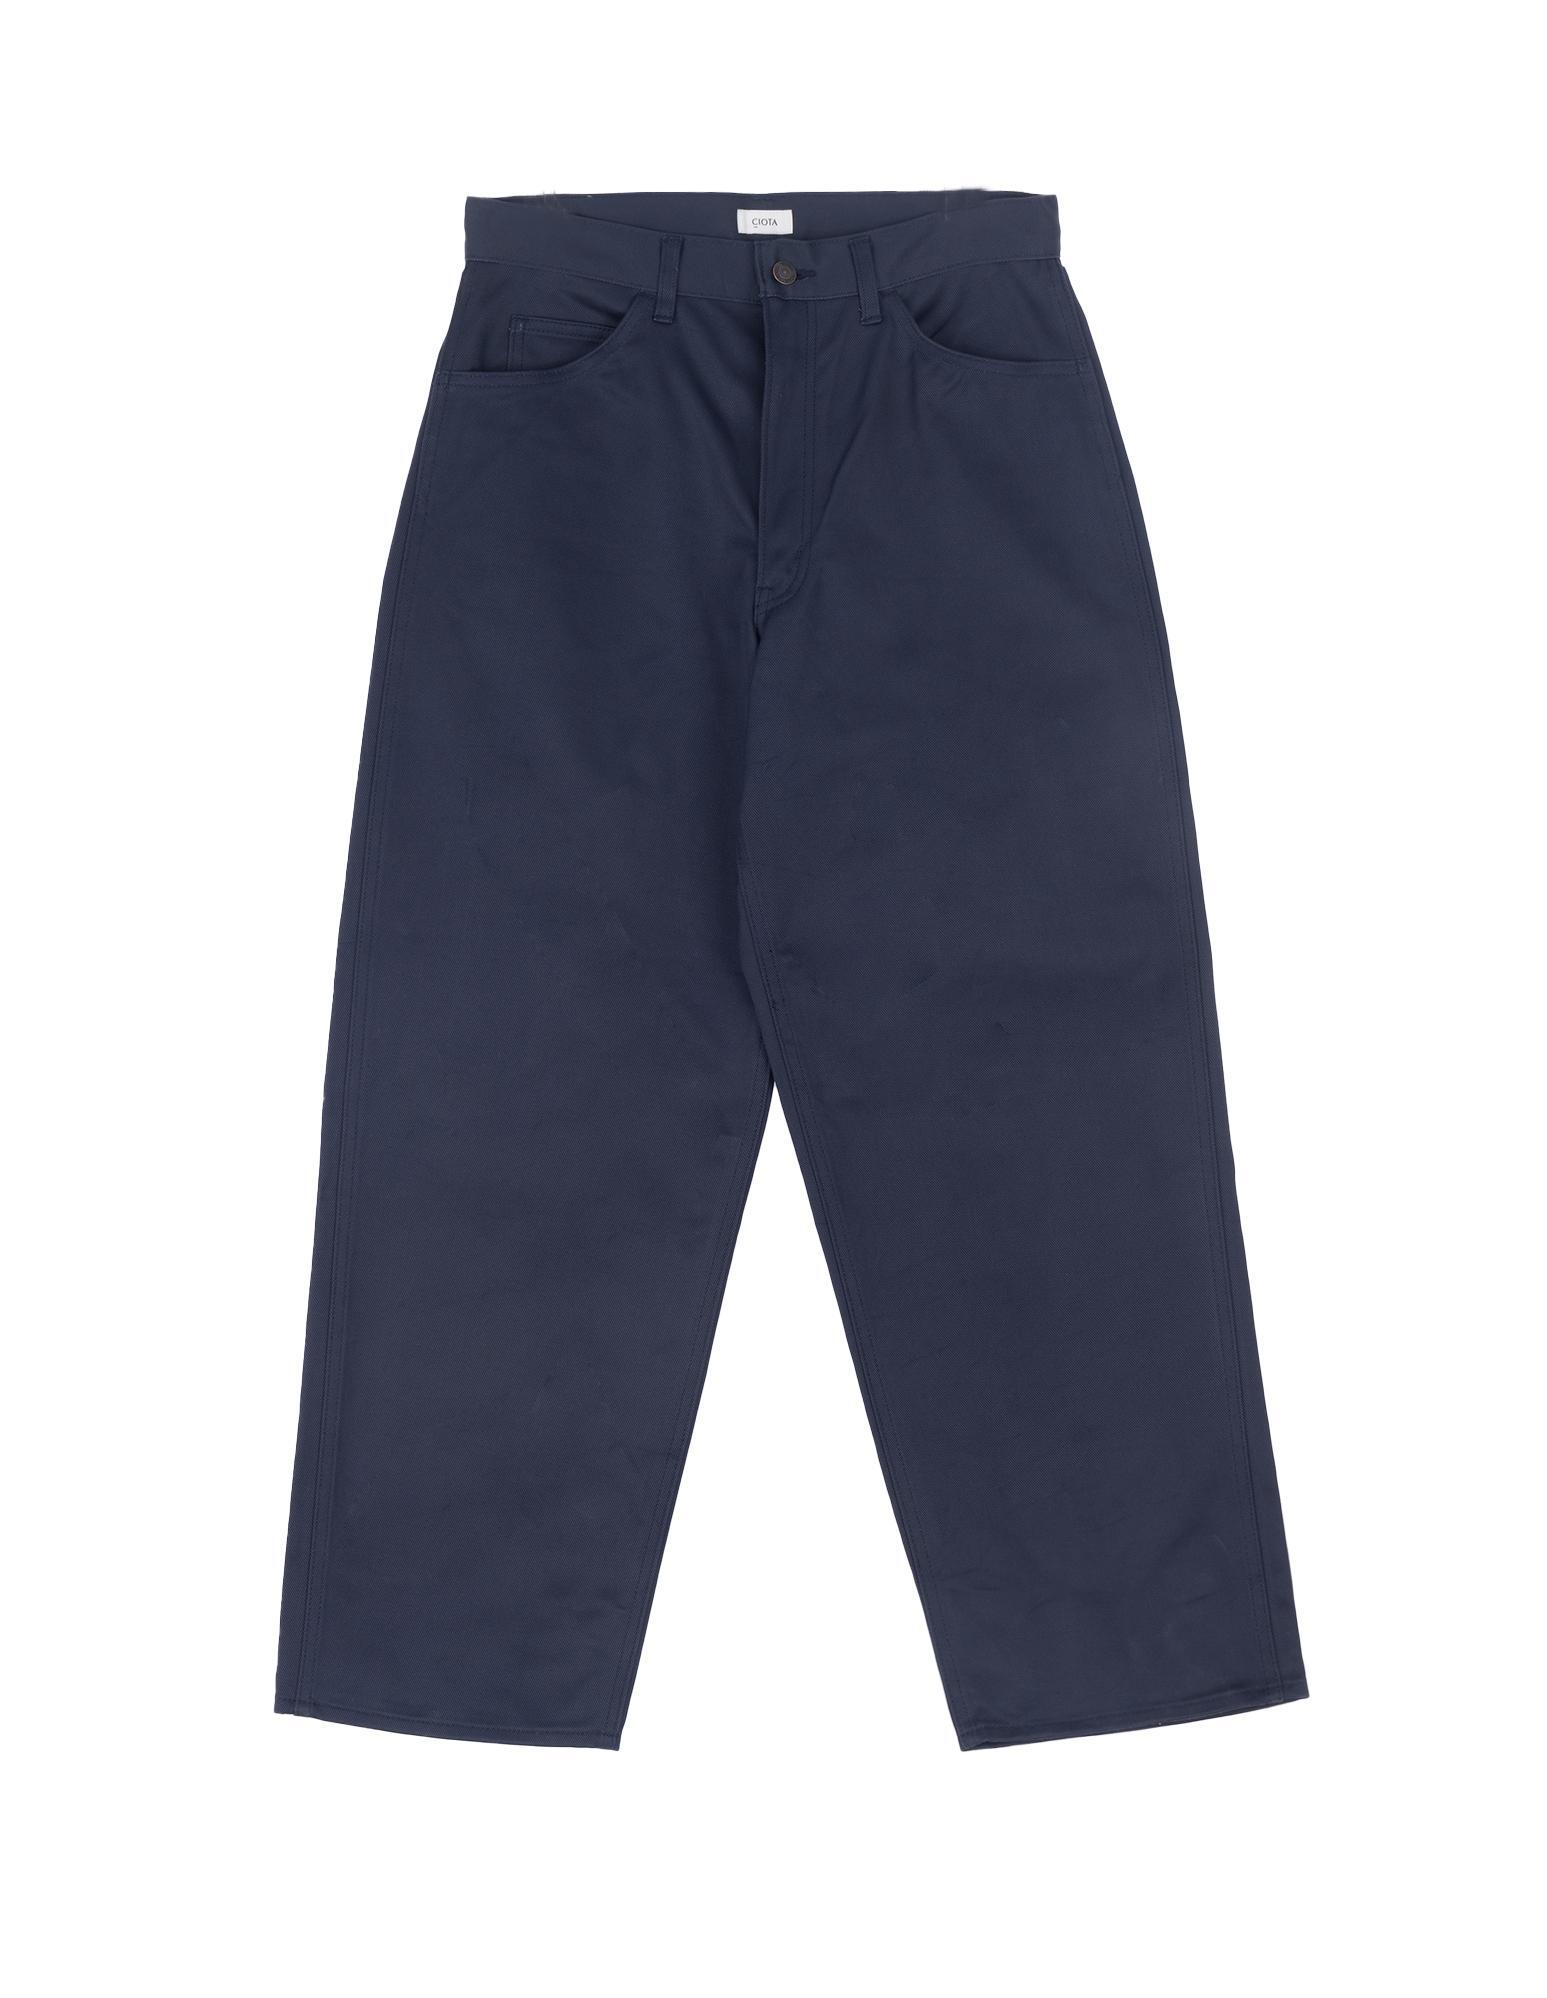 Cotton Twill 5p Pants (Navy)